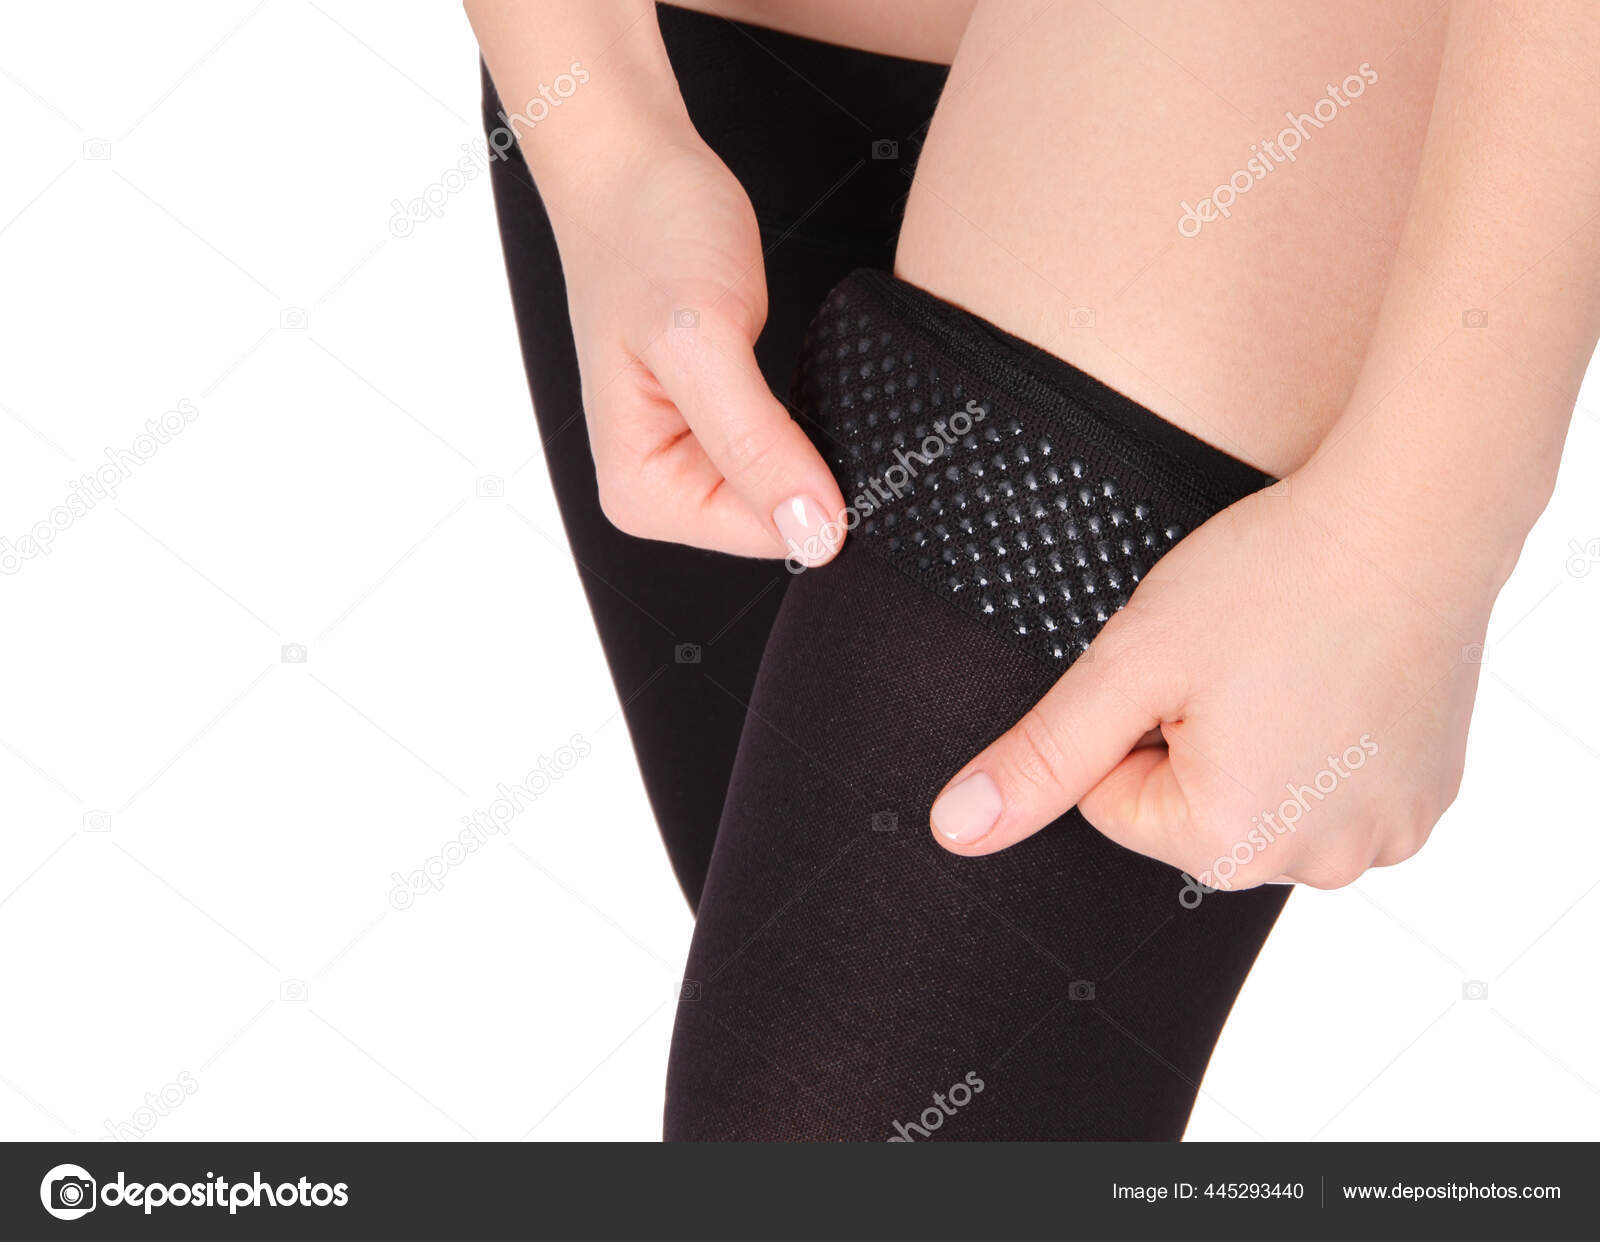 https://st2.depositphotos.com/33757592/44529/i/1600/depositphotos_445293440-stock-photo-compression-hosiery-medical-compression-stockings.jpg